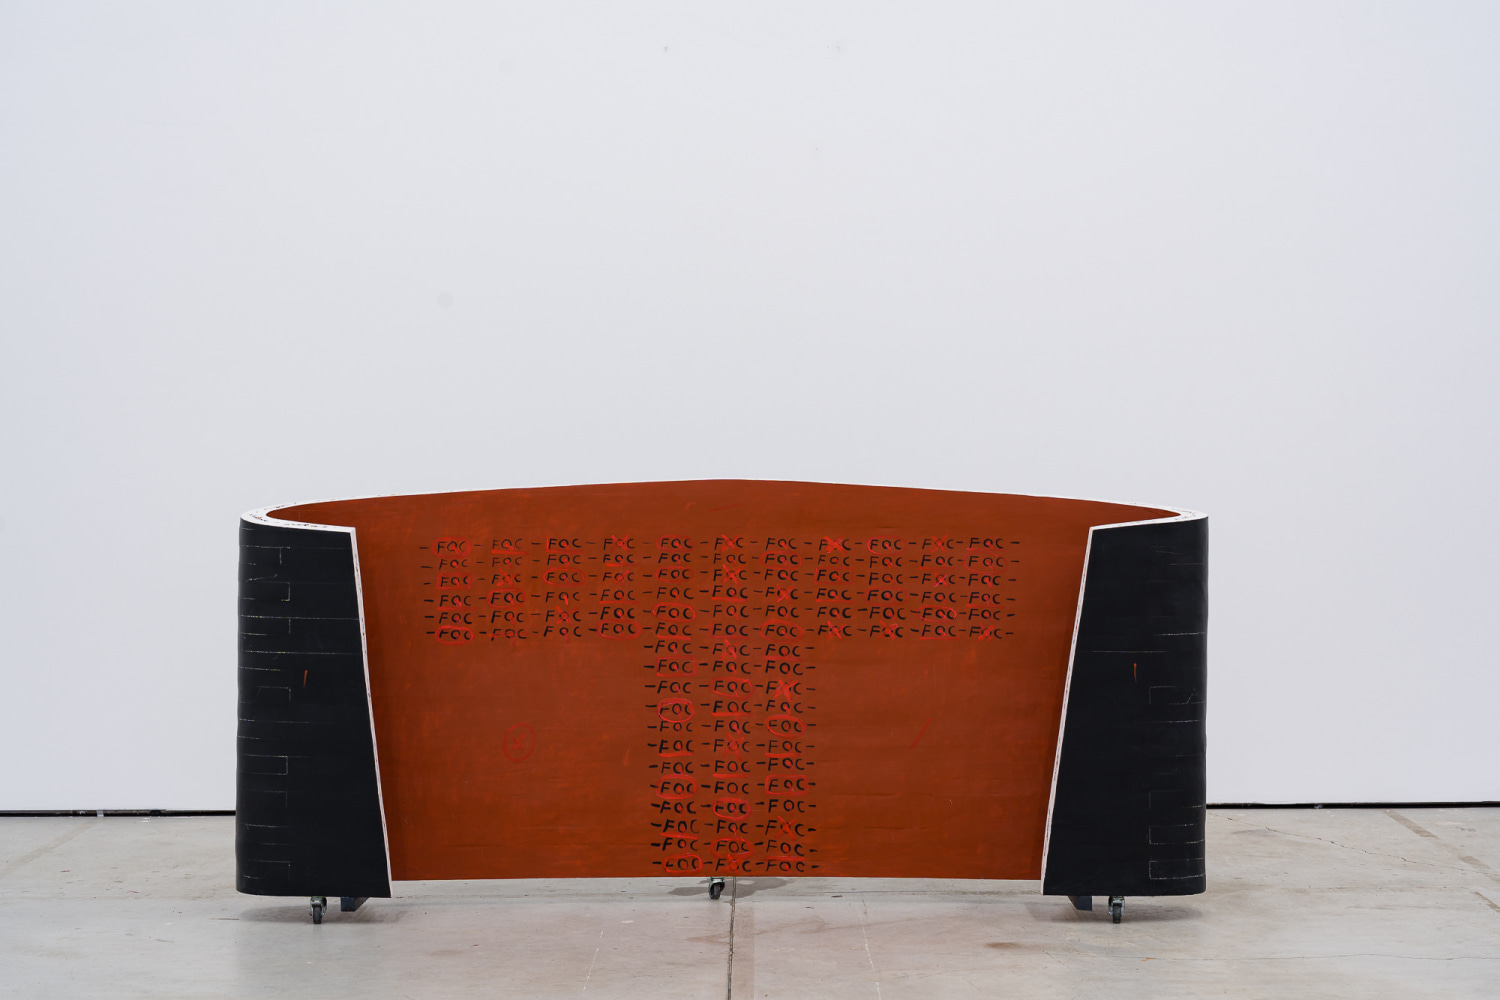 Marian Zidaru
Throne, 2016
Wood and acrylic
250x110x35cm